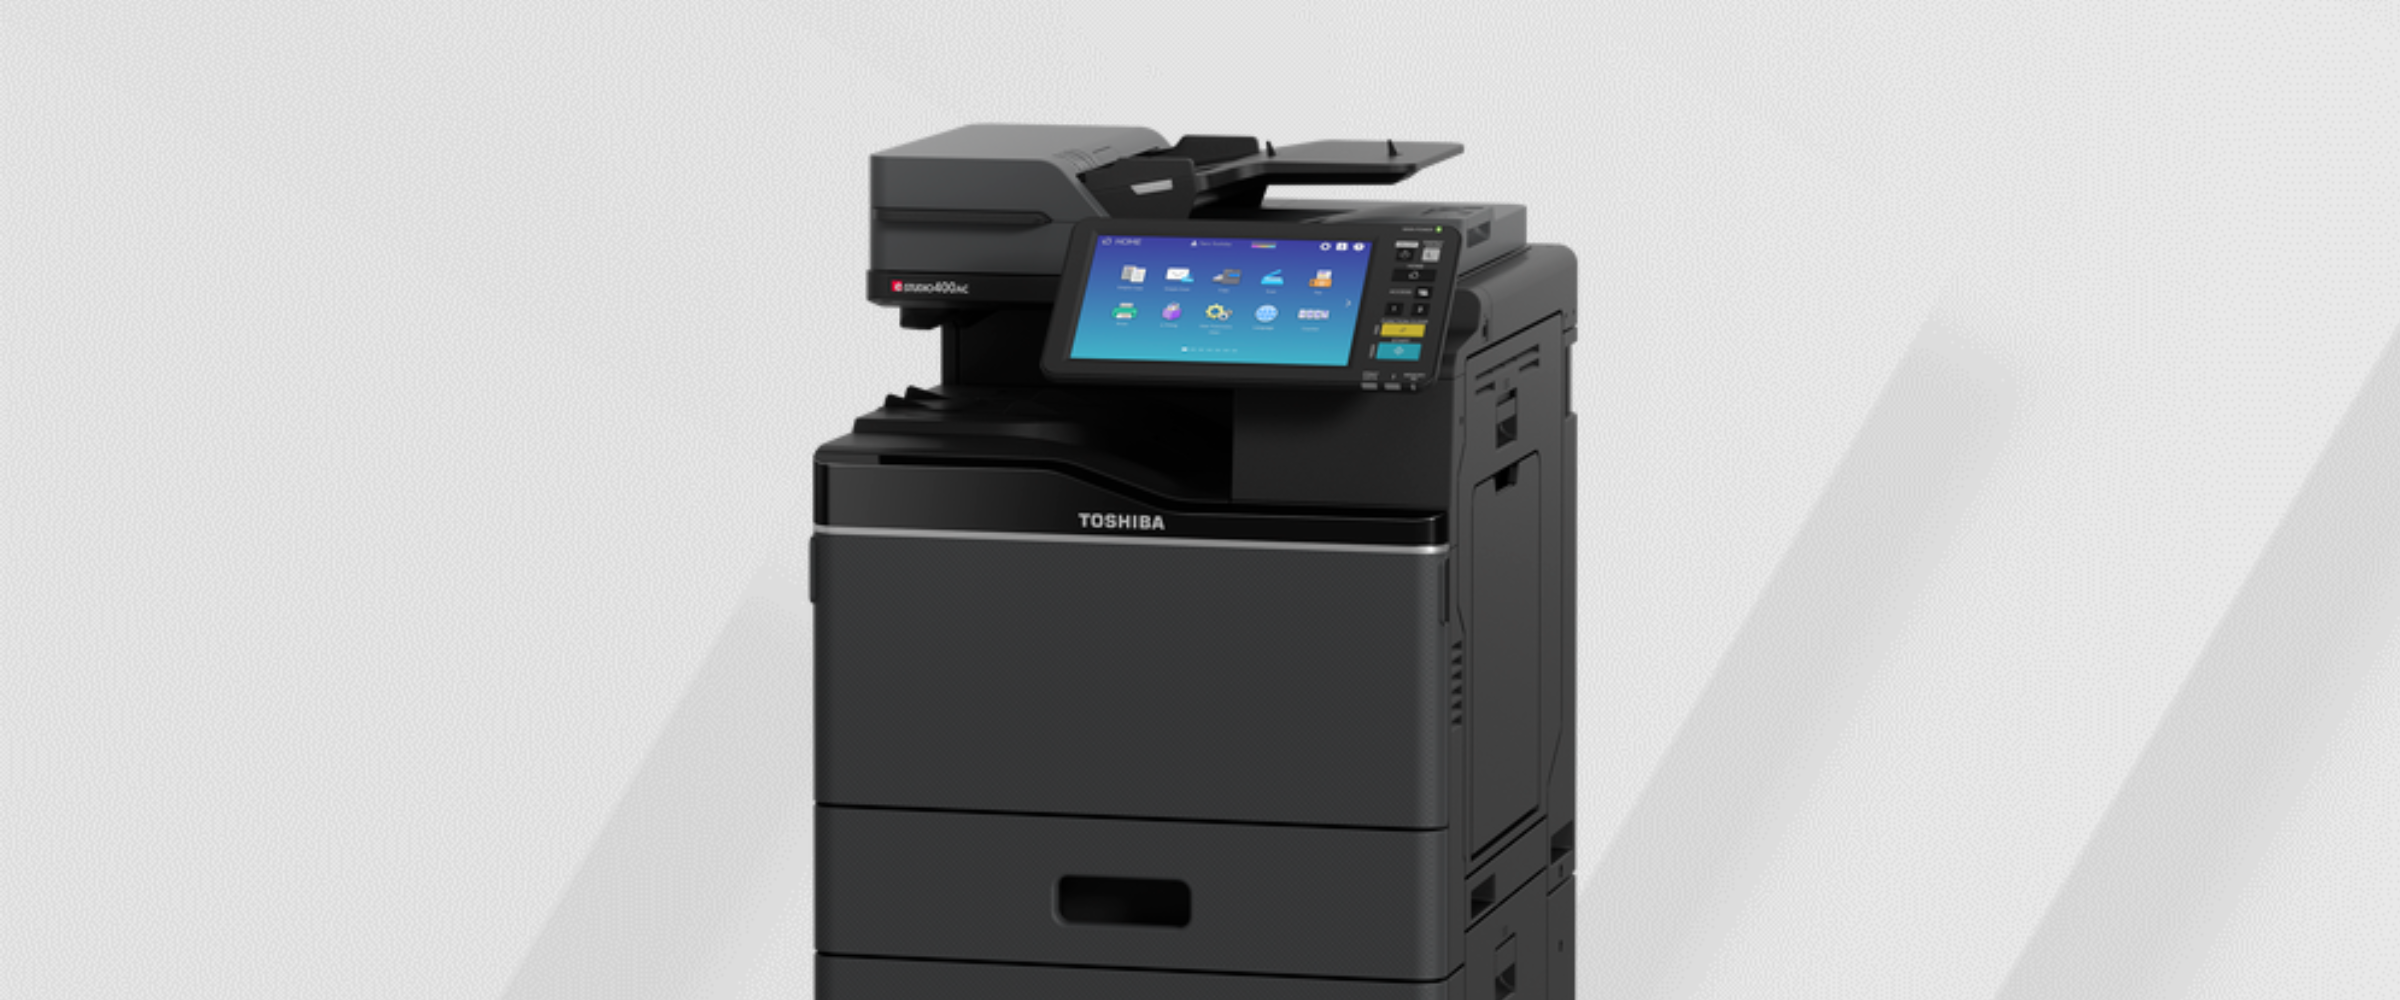 Toshiba multifunction printer